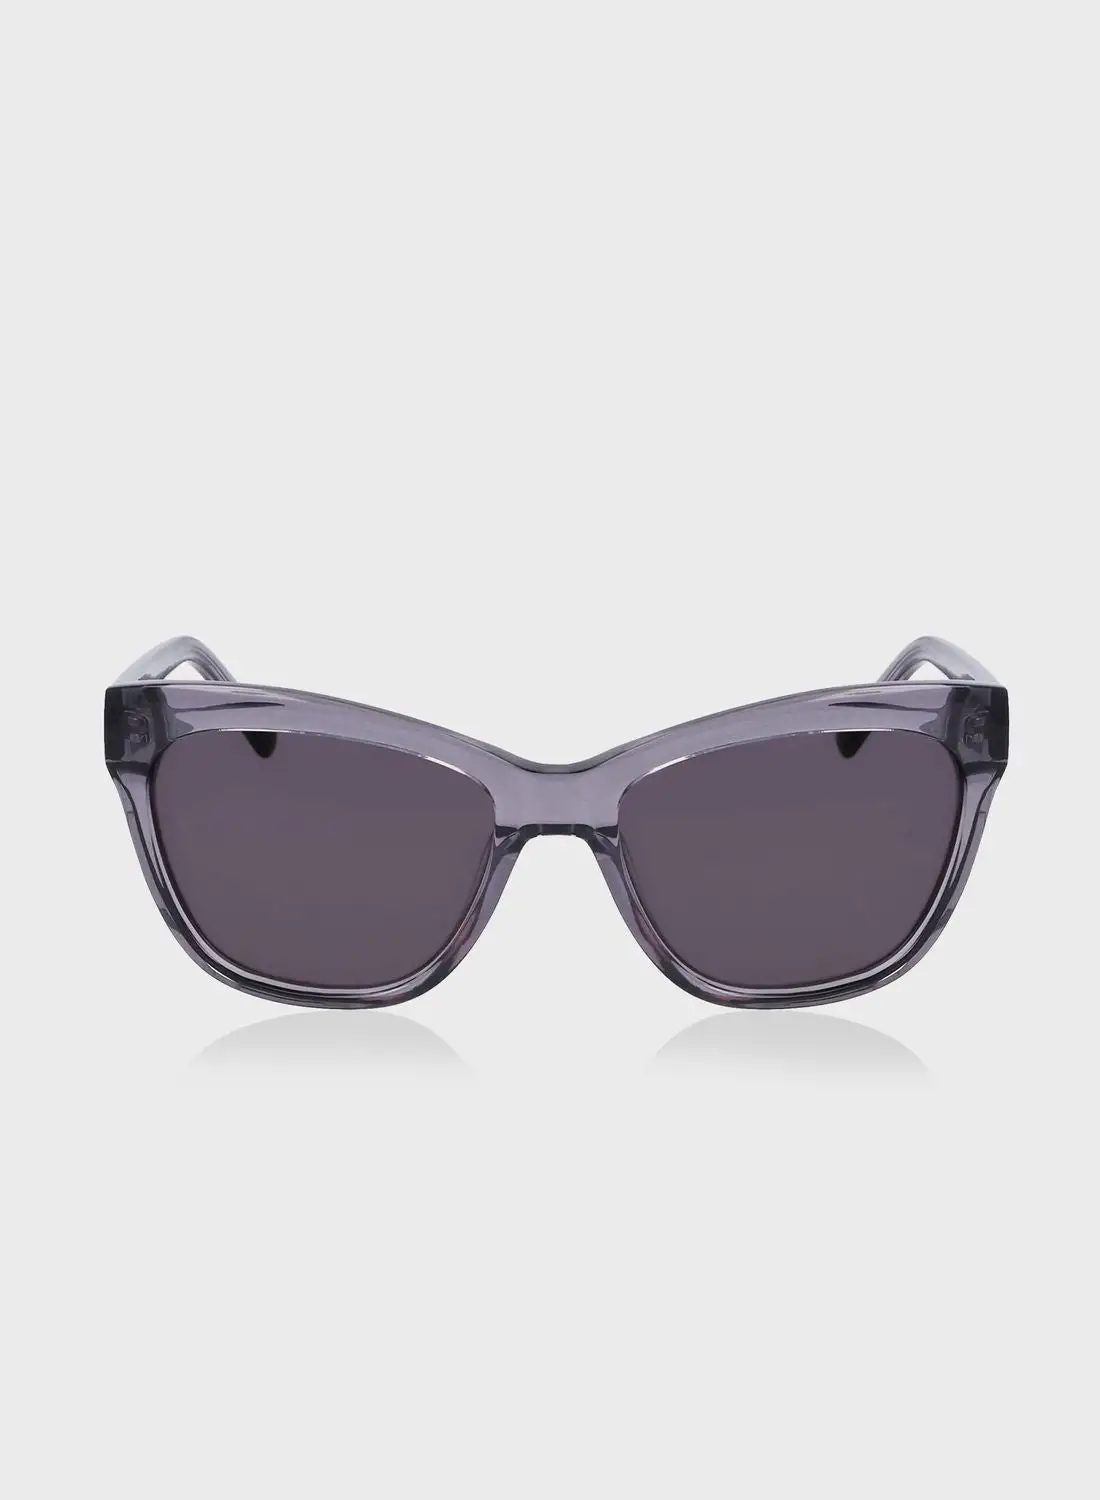 DKNY Wayfarer Sunglasses